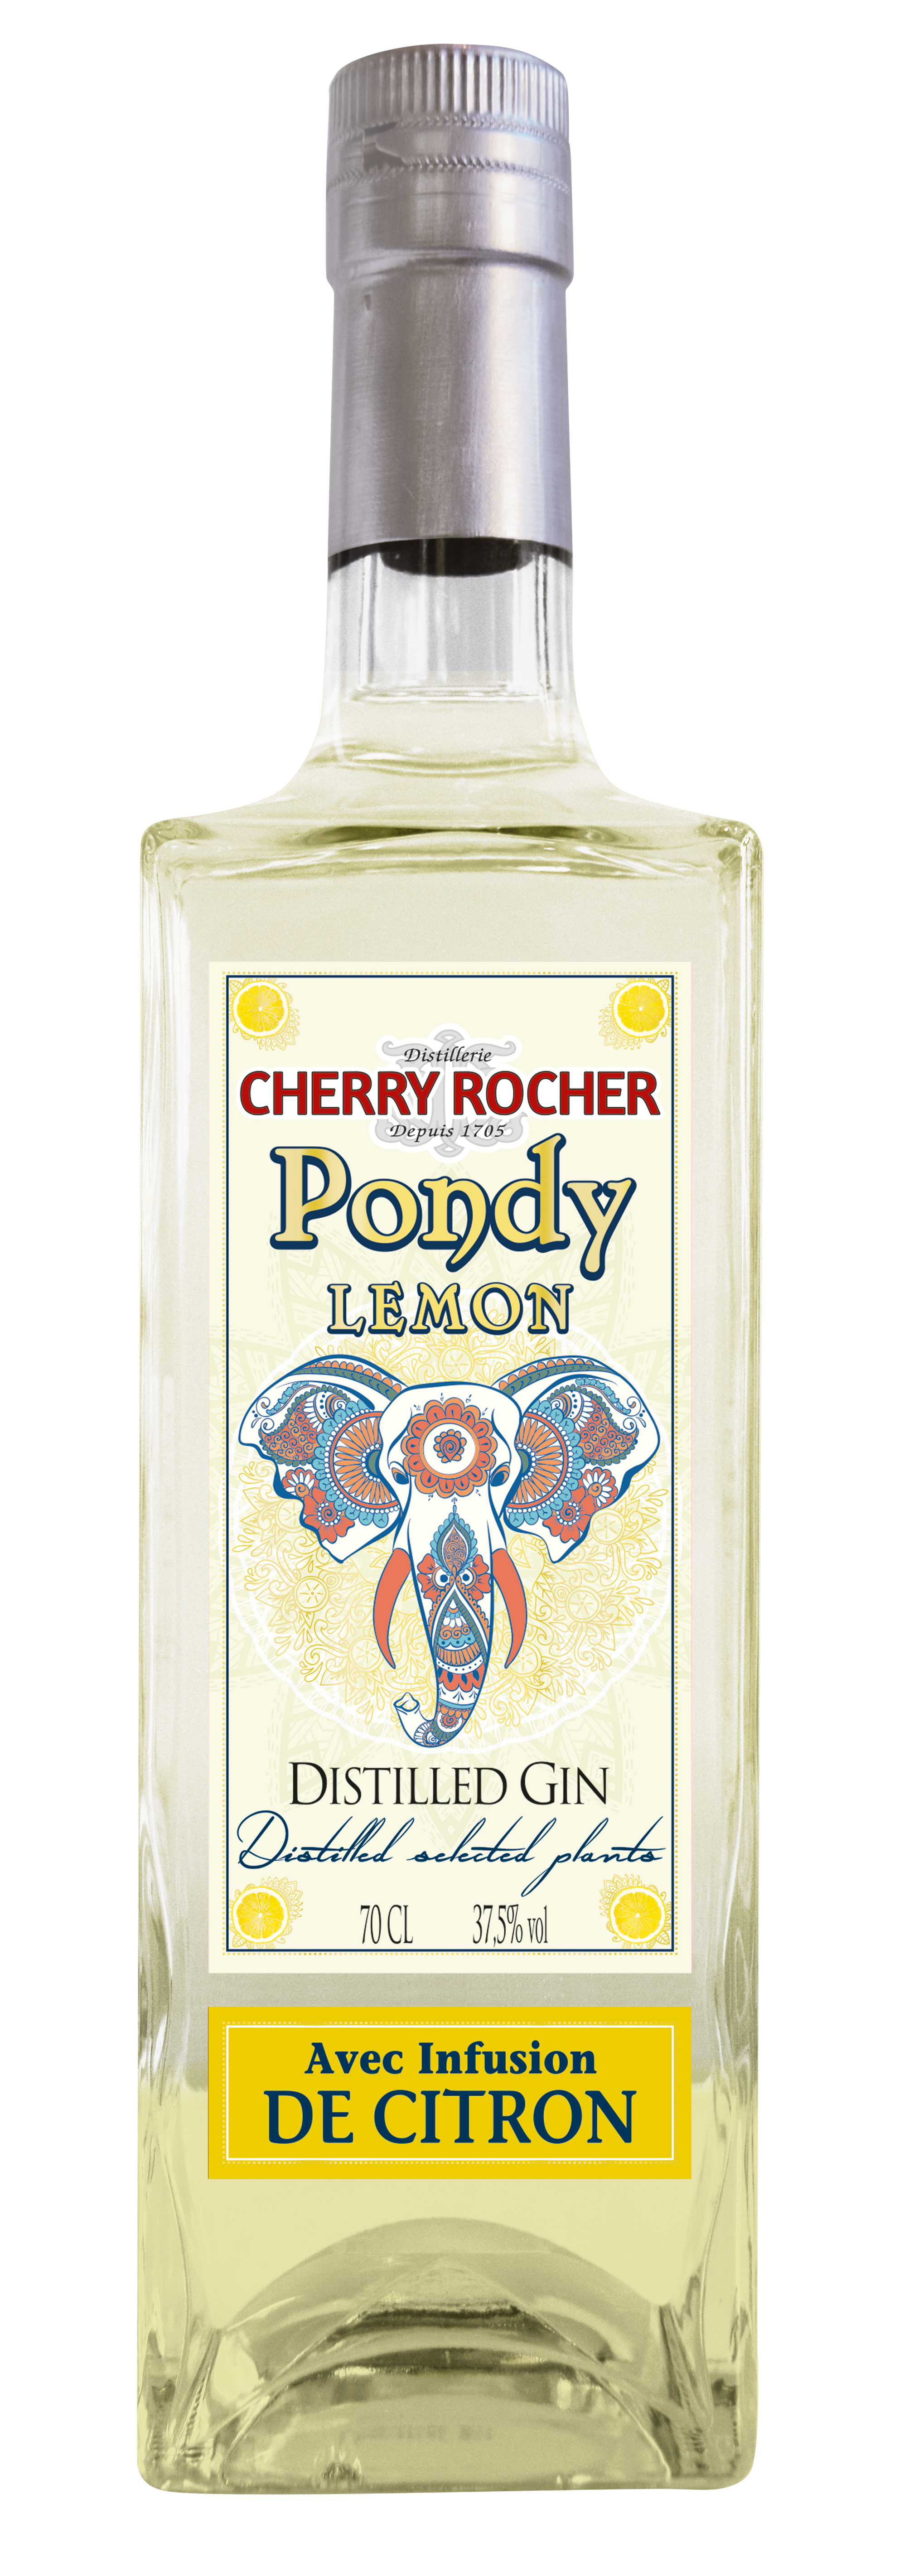 Lemon Gin Pondy - Cherry Rocher